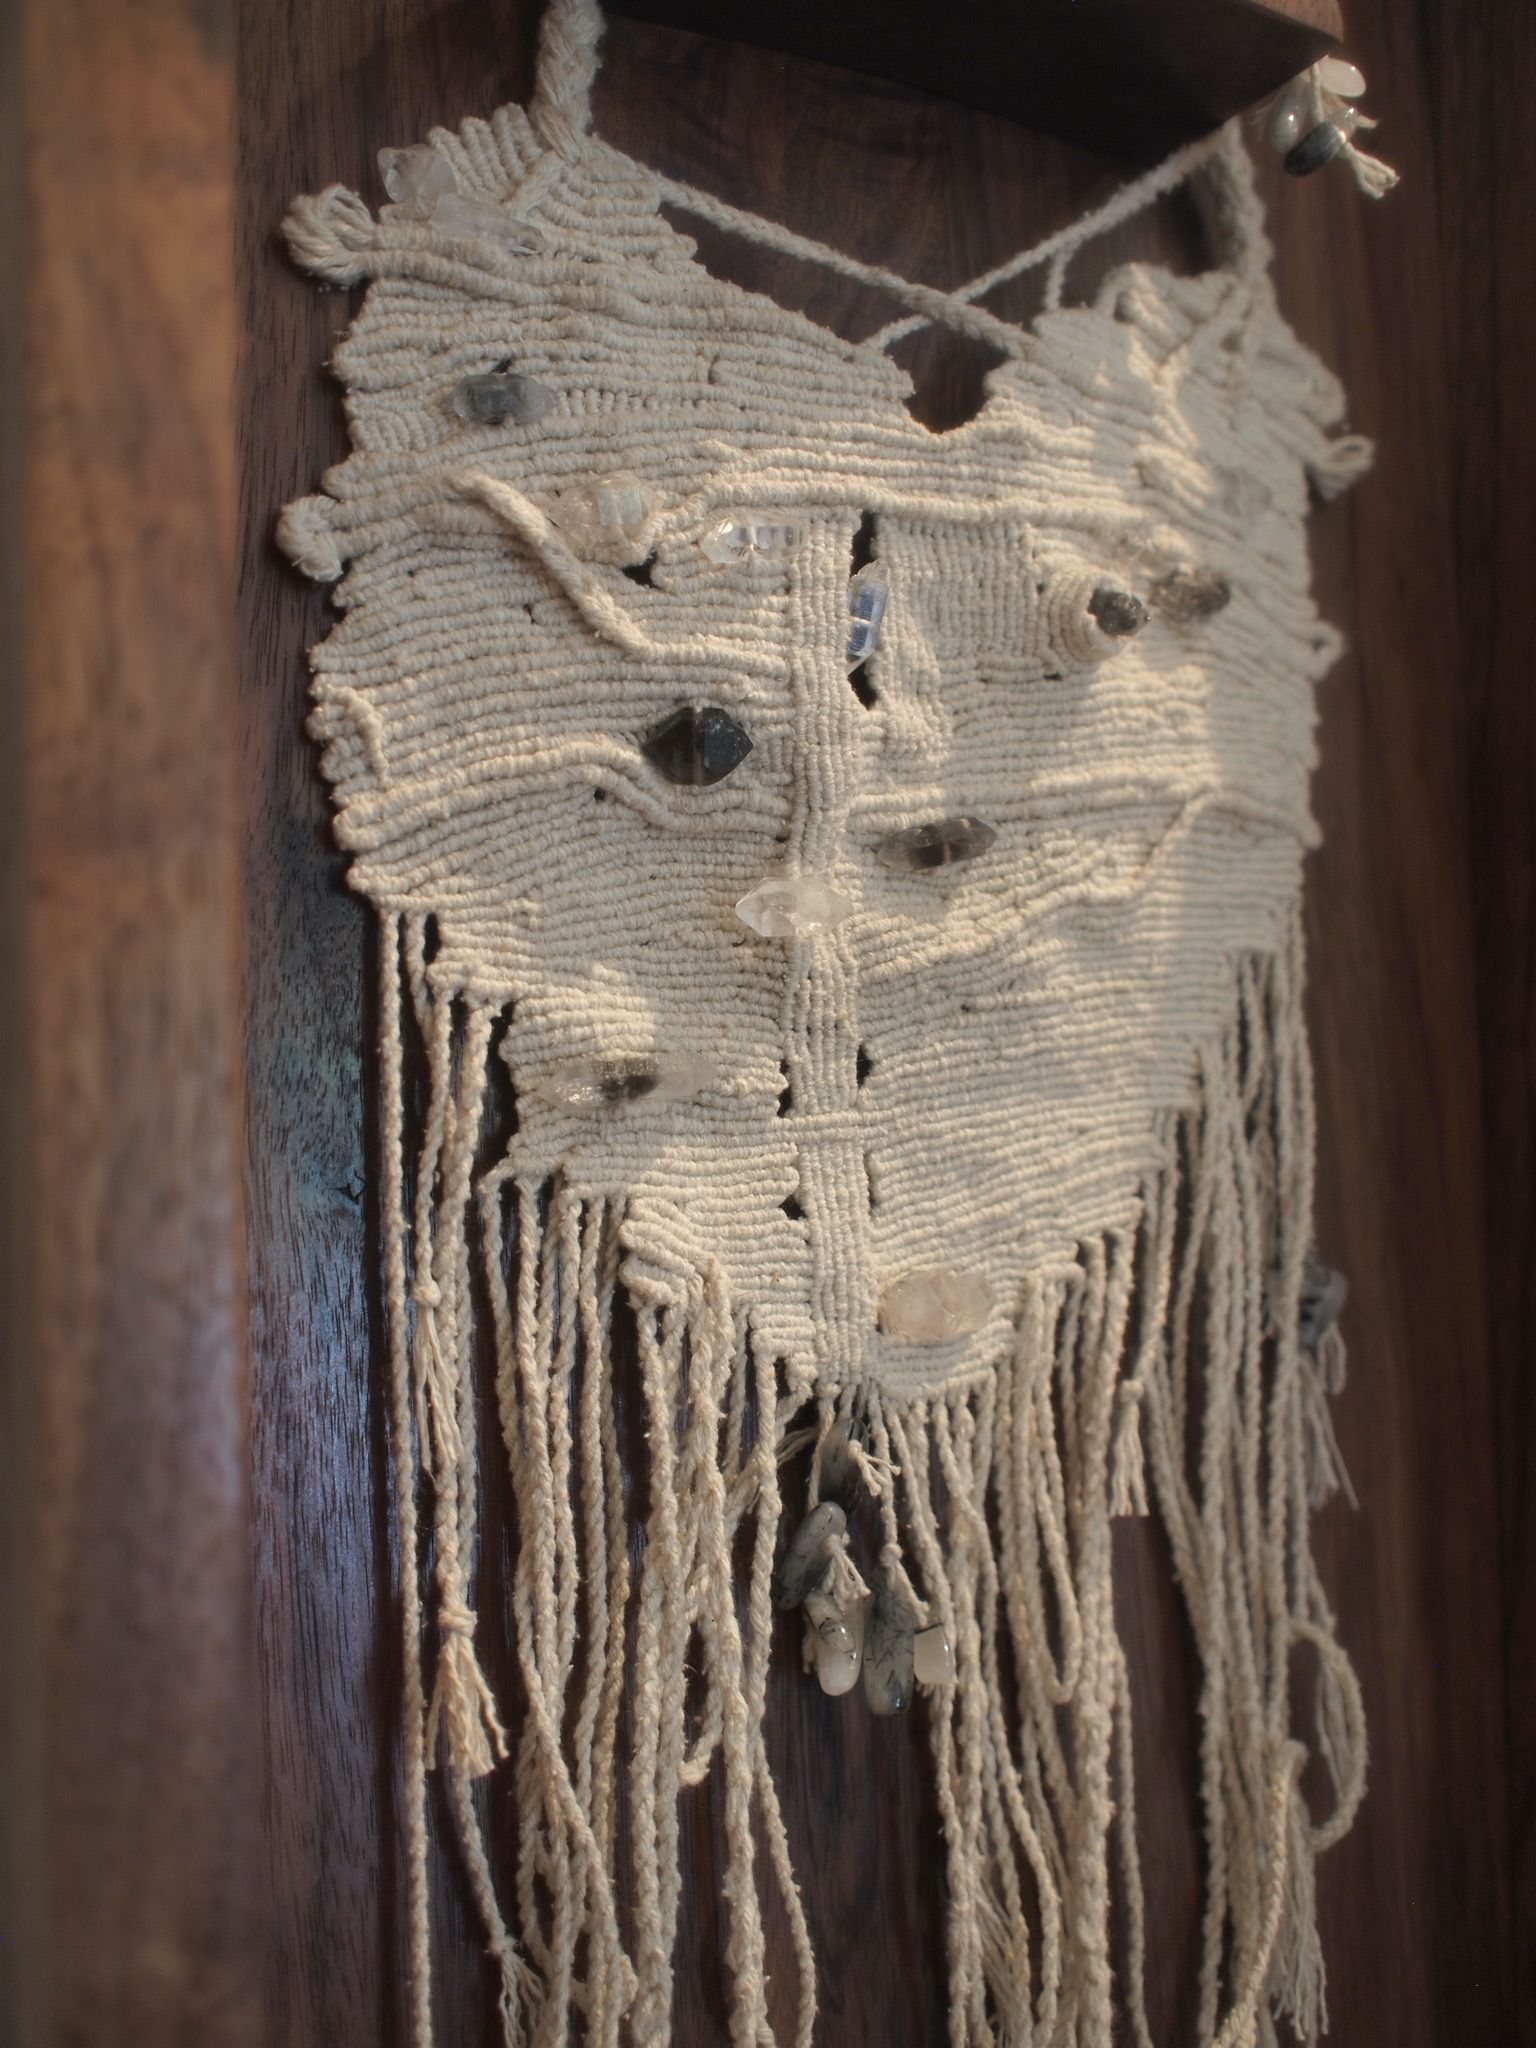 Detail of silk knot work and smoky quartz sculptural adornment in a dark wood box